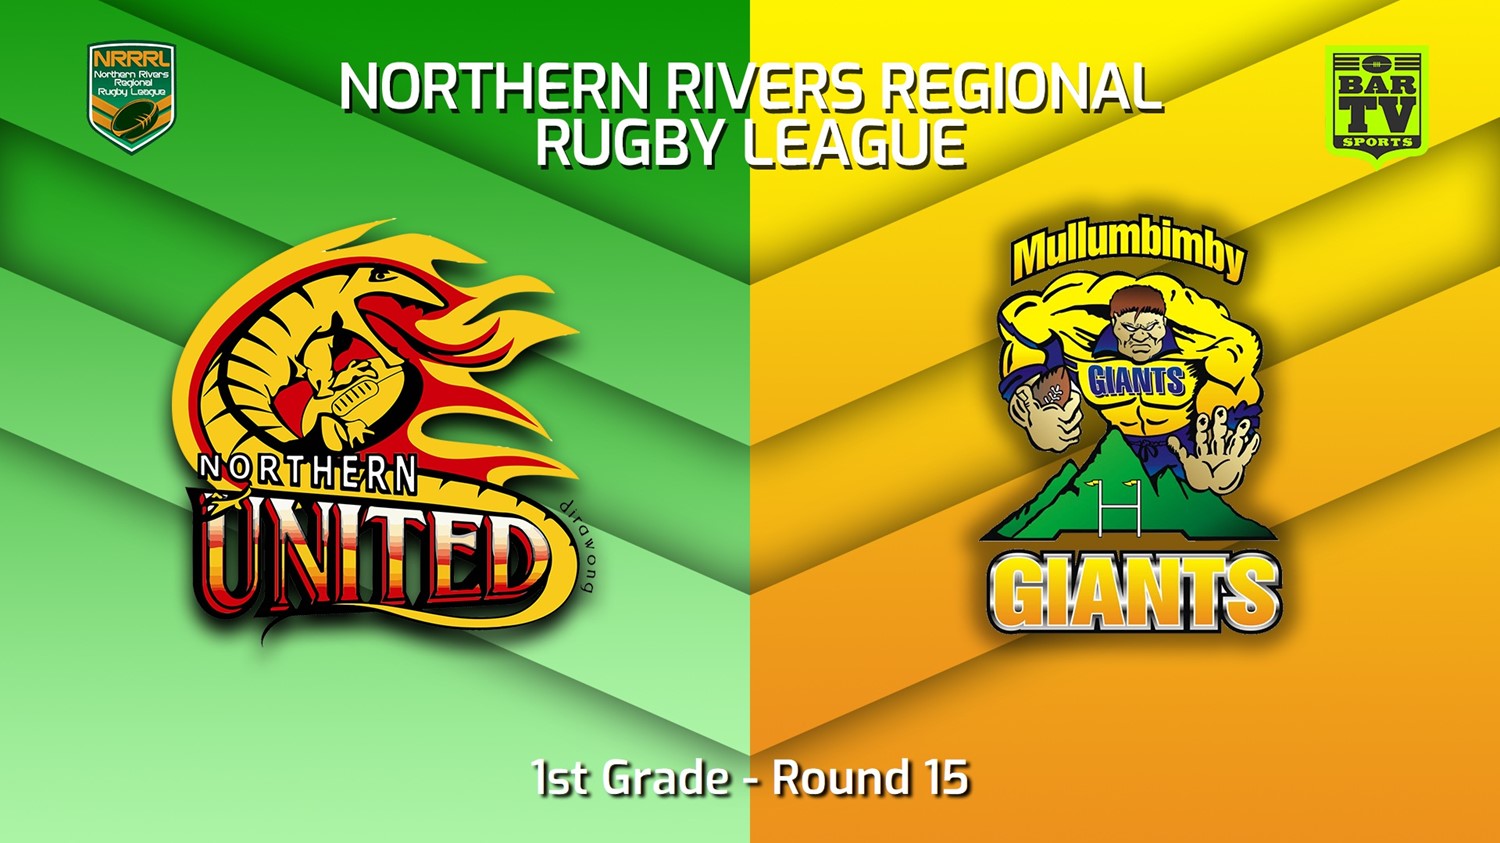 230805-Northern Rivers Round 15 - 1st Grade - Northern United v Mullumbimby Giants Slate Image